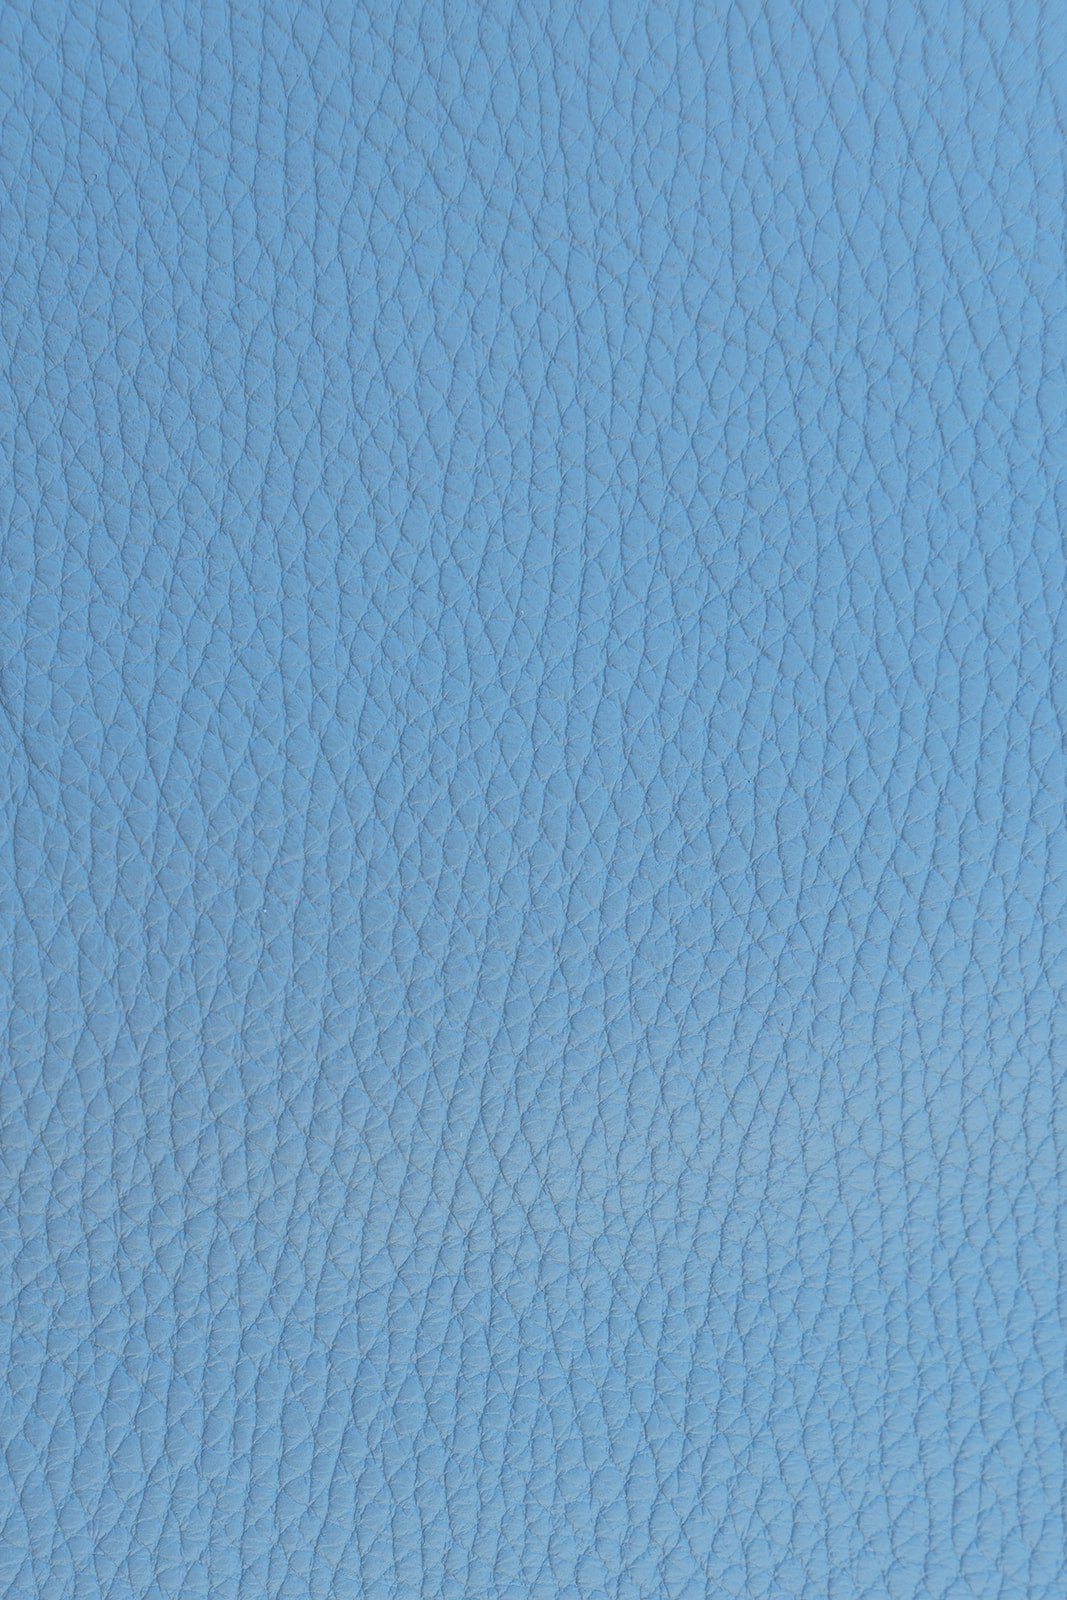 JL wallet leather - Stone blue